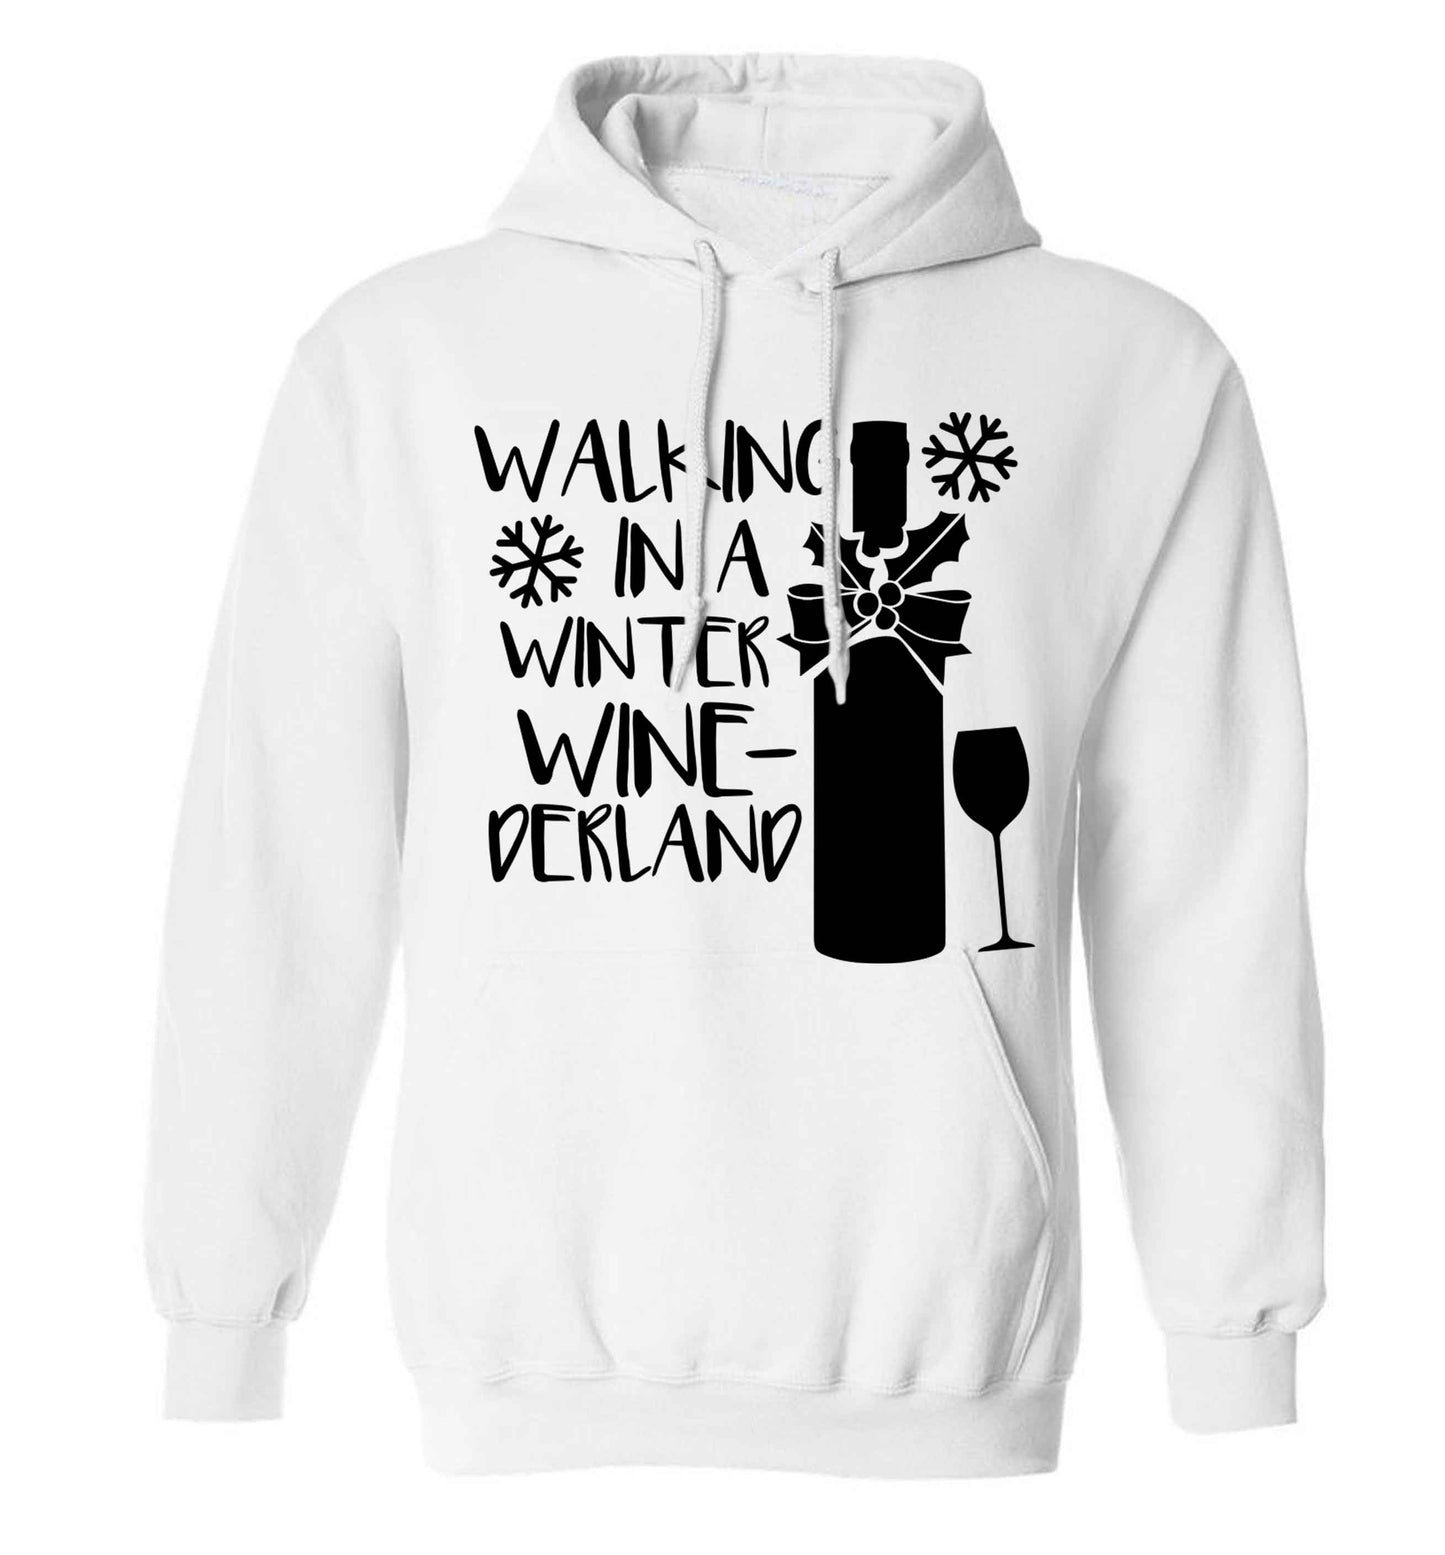 Walking in a wine-derwonderland adults unisex white hoodie 2XL